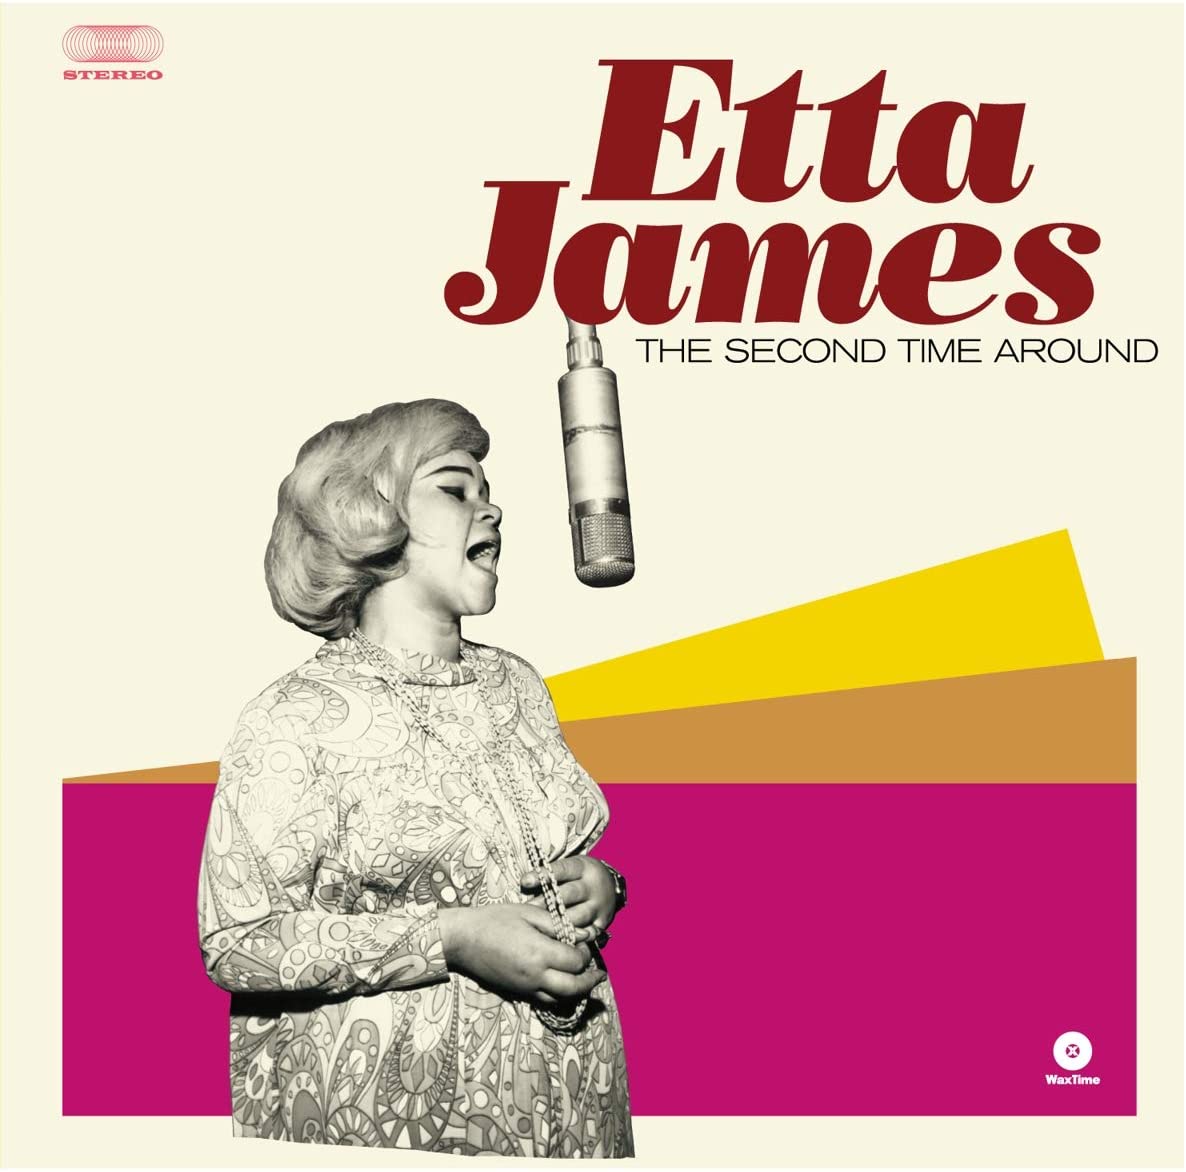 James, Etta/The Second Time Around [LP]